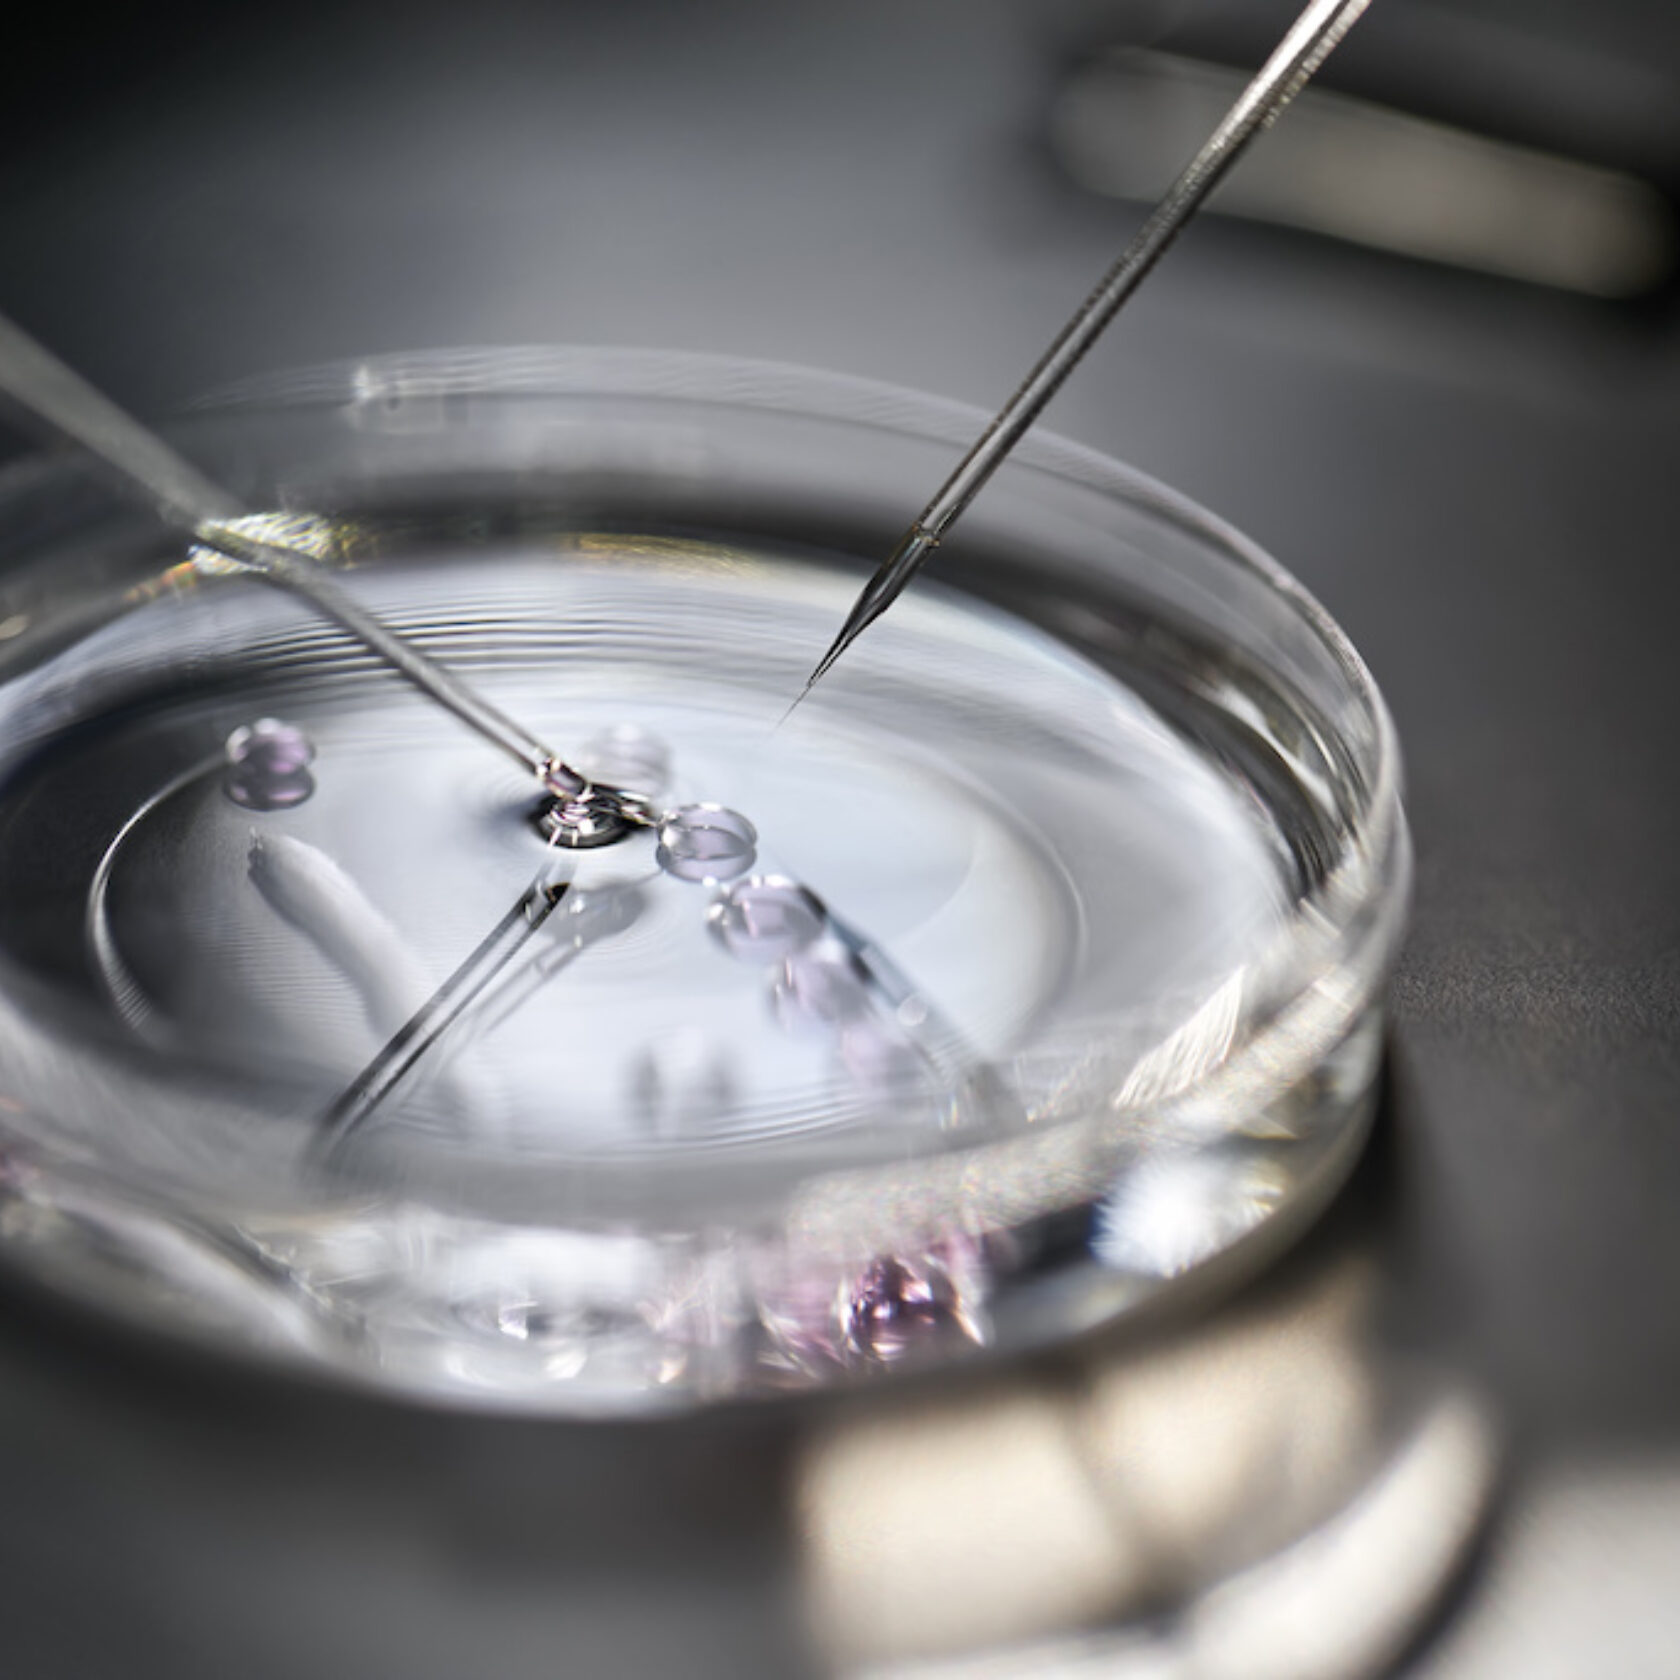 Embryonentransfer bei künstlicher Befruchtung in Petrischale